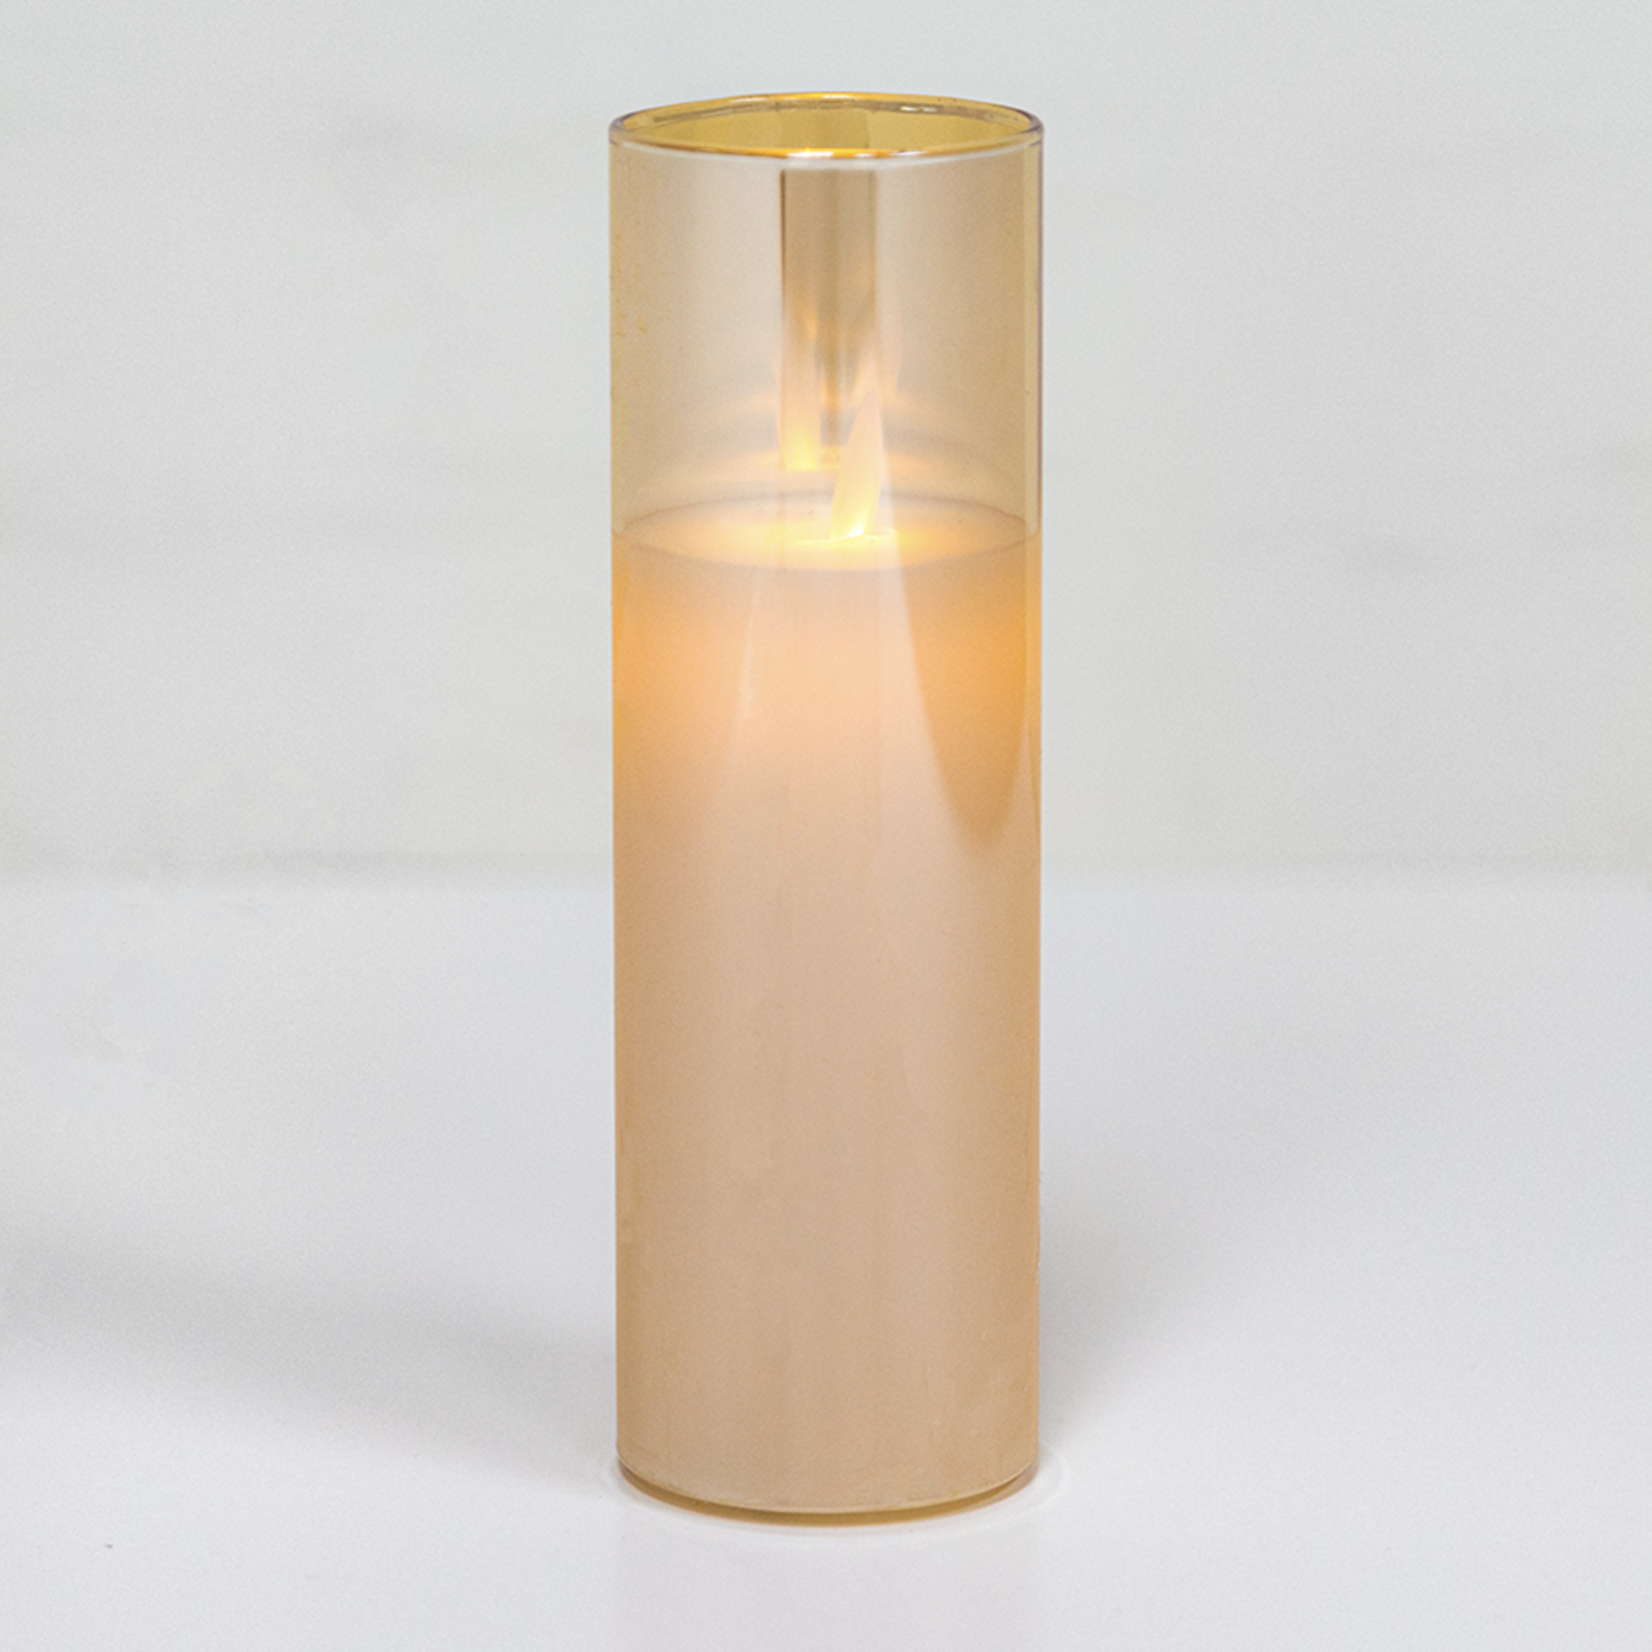 7”H X 2” AMBER LED GLASS CANDLE